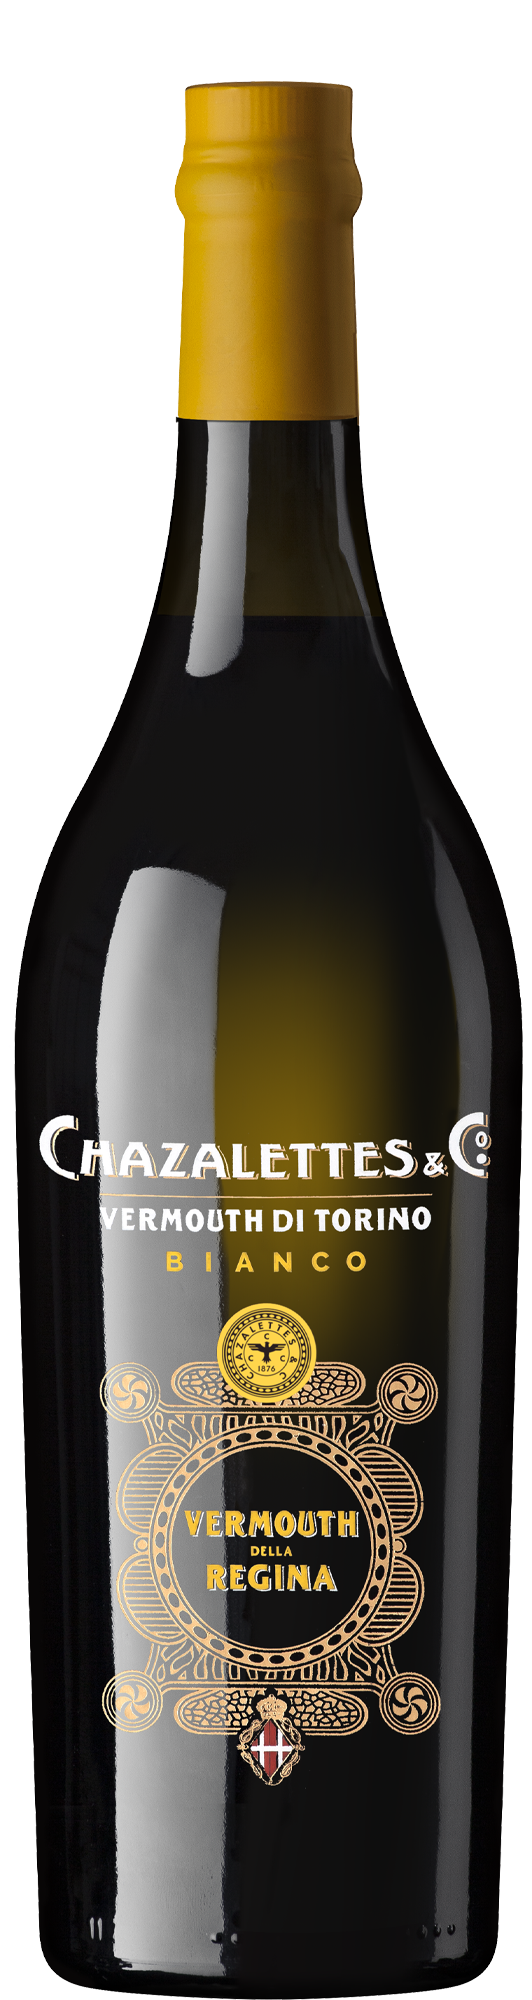 Chazalettes & Co. Vermouth de Torino Bianco (750ml)